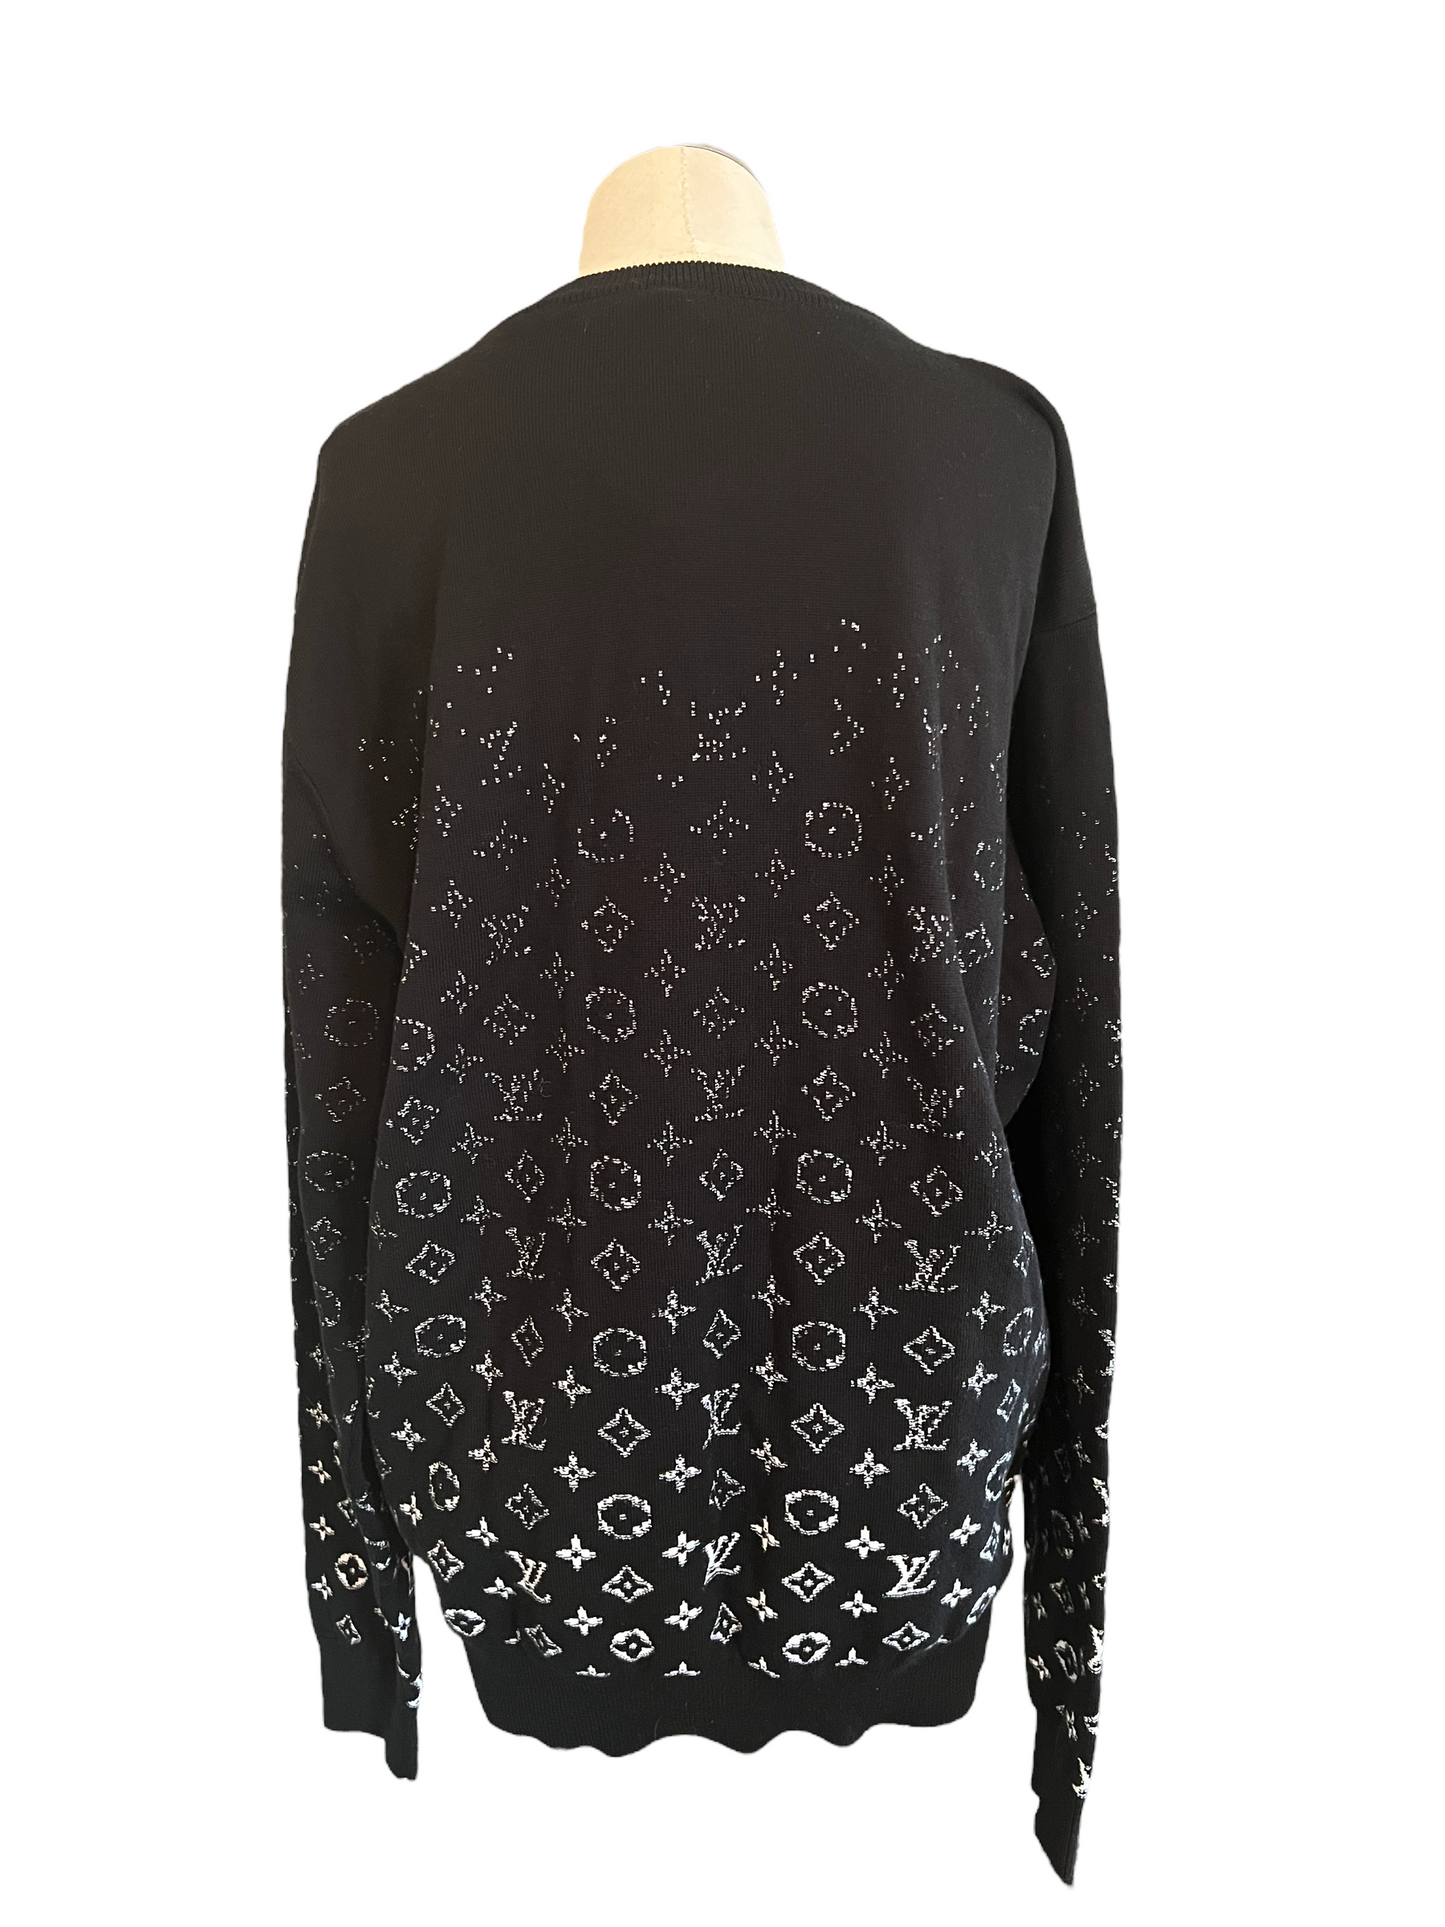 Louis Vuitton Black & White Men's Size L Lvse Monogram Degrade Crewneck Sweater